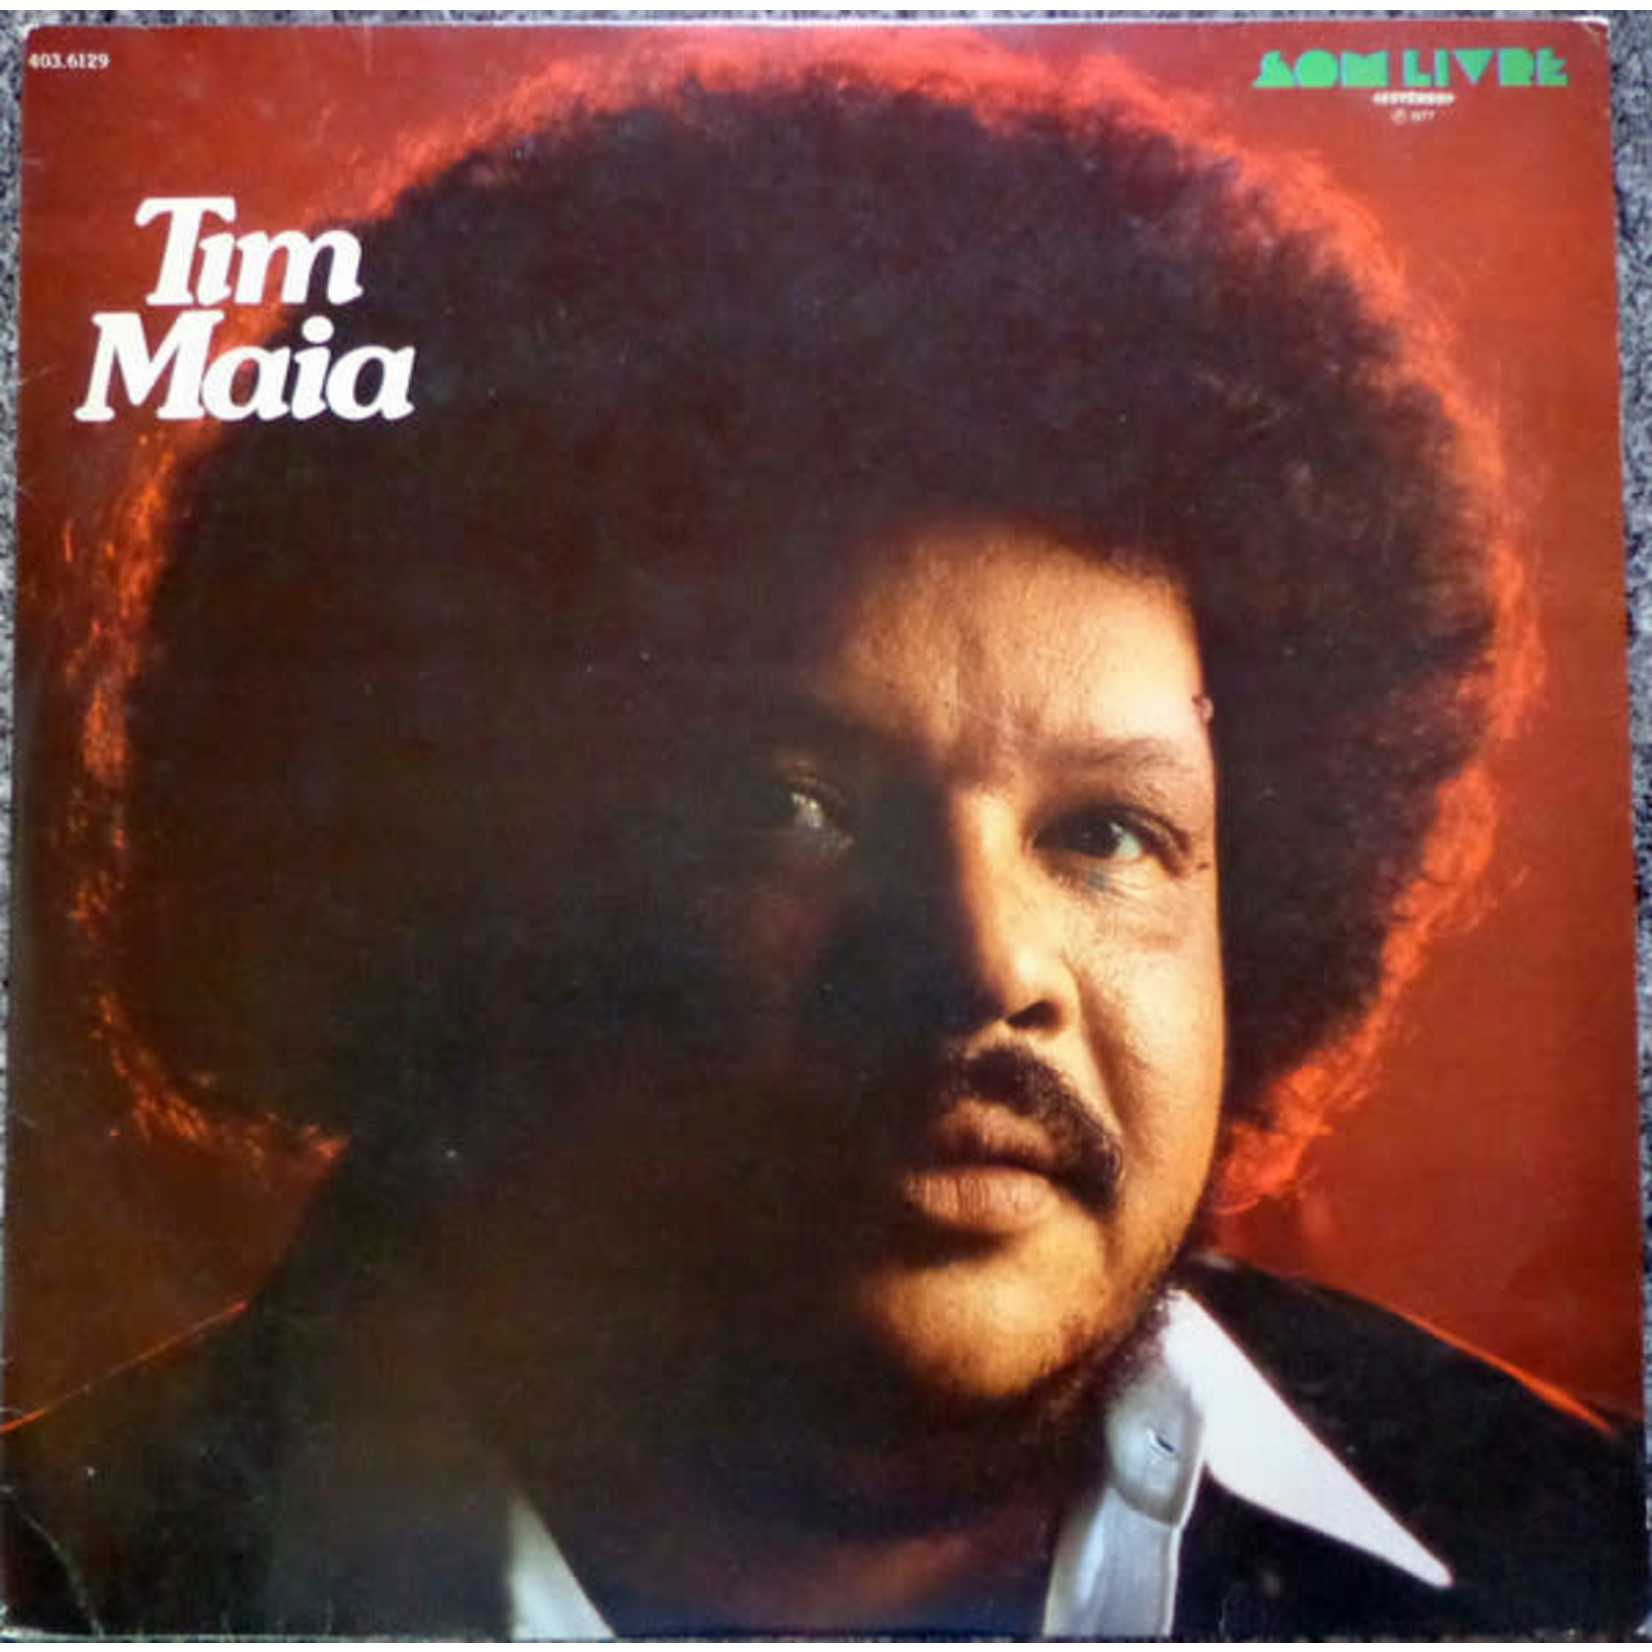 [New] Tim Maia - self-titled - 1977 album